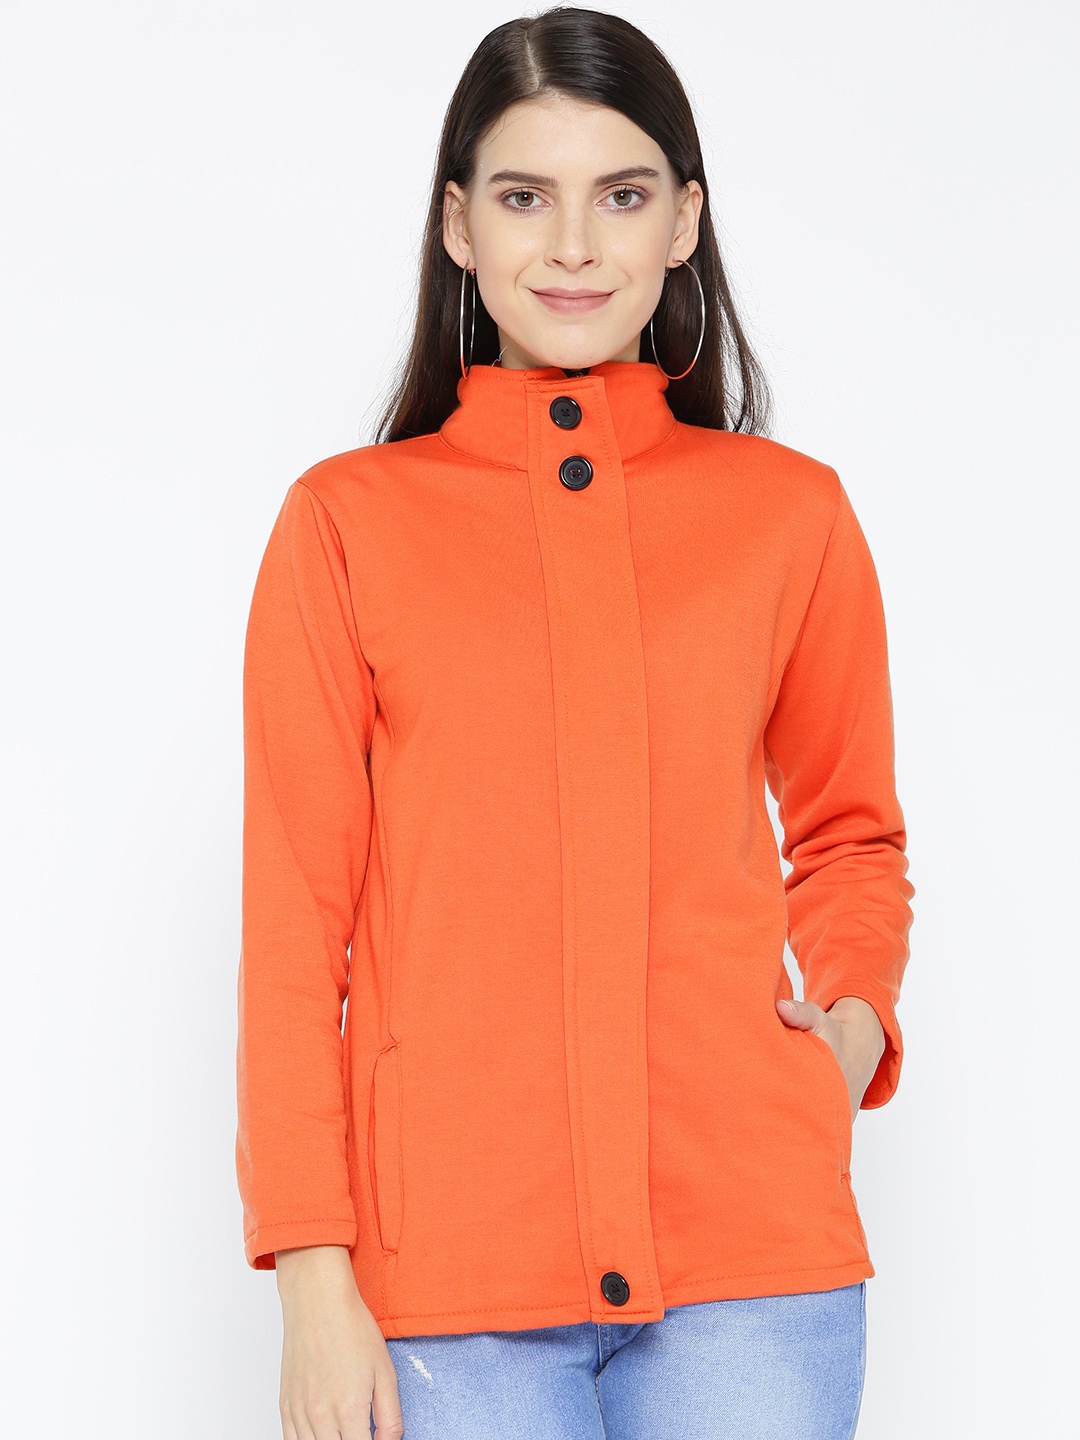 Belle Fille Women Orange Solid Hooded Jacket Price in India